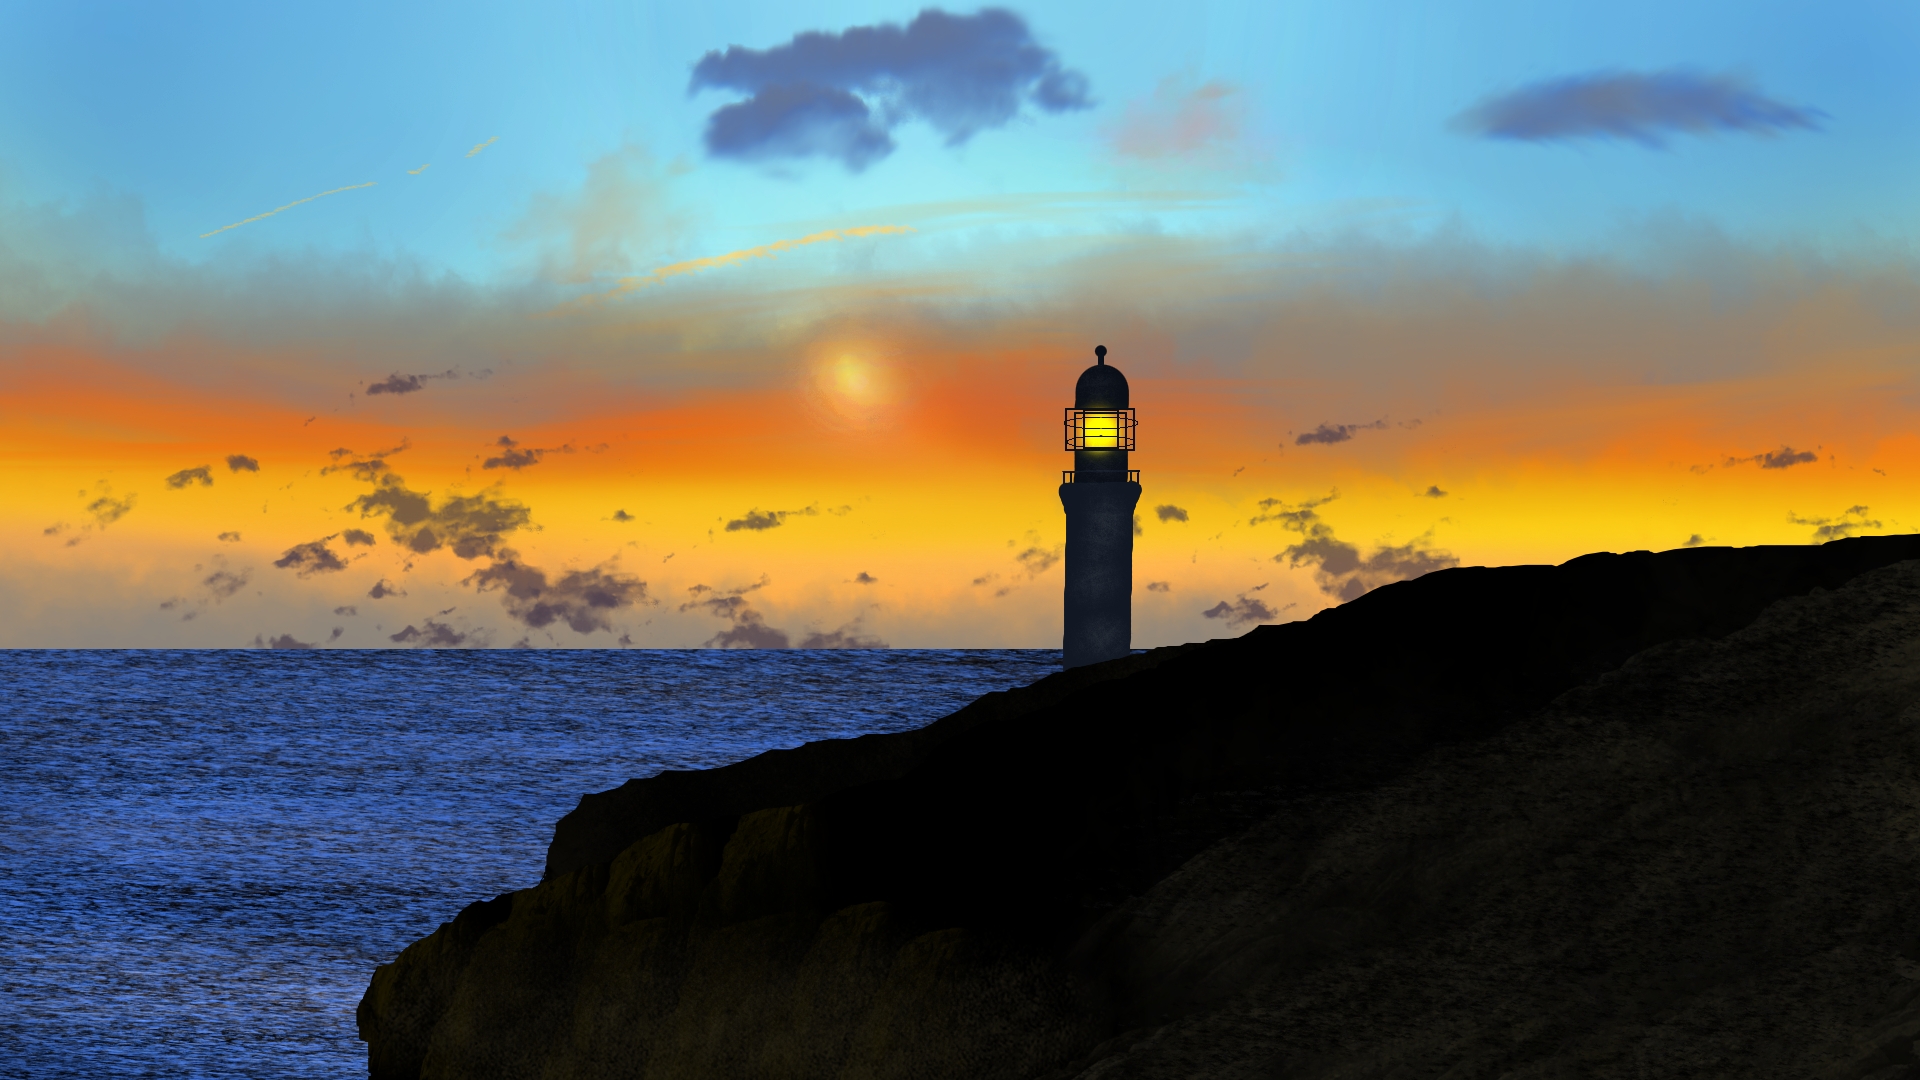 Digital Painting Digital Art Lighthouse Landscape Twilight Silhouette Water Sunset Glow Sky Clouds 1920x1080